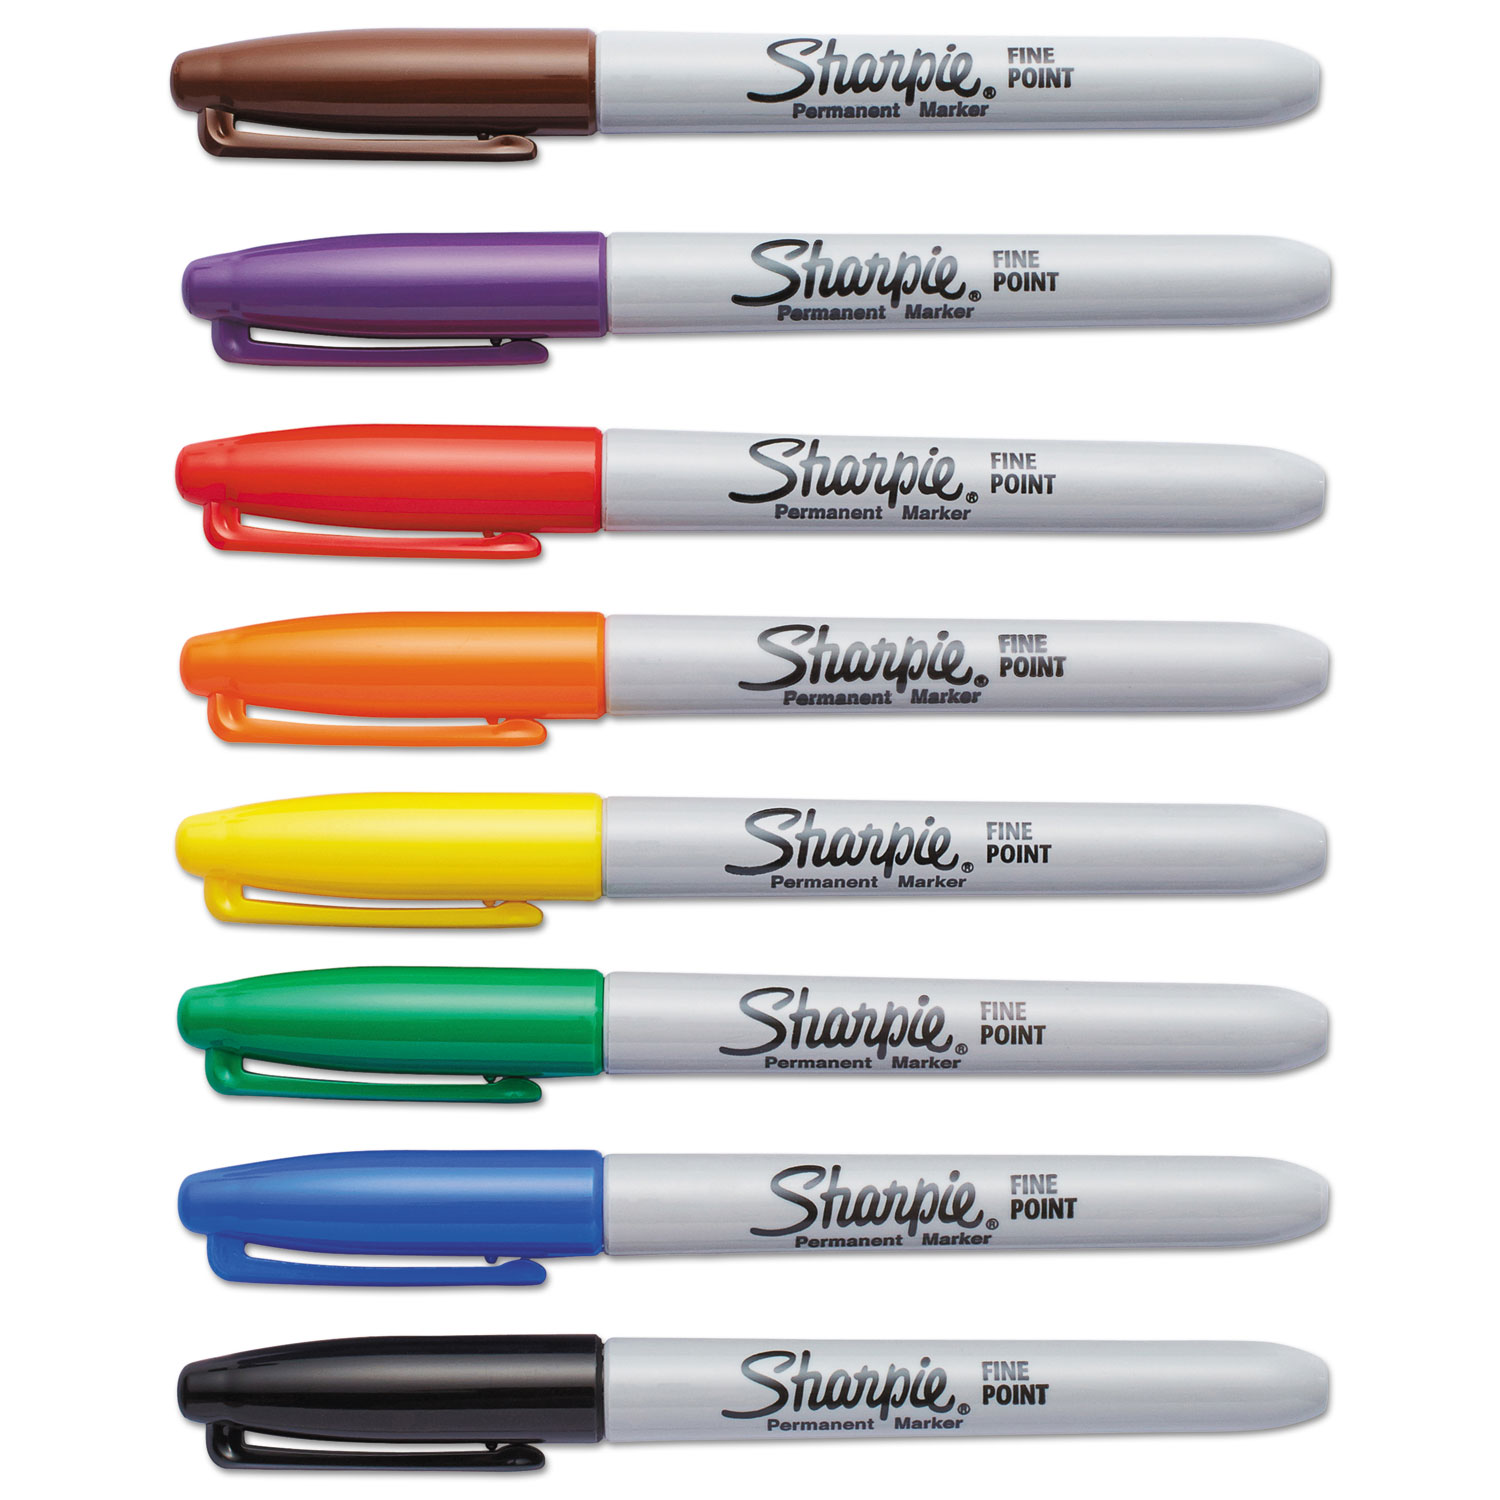 Sharpie Color Burst Ultra Fine Permanent Markers 24/pkg Assorted 